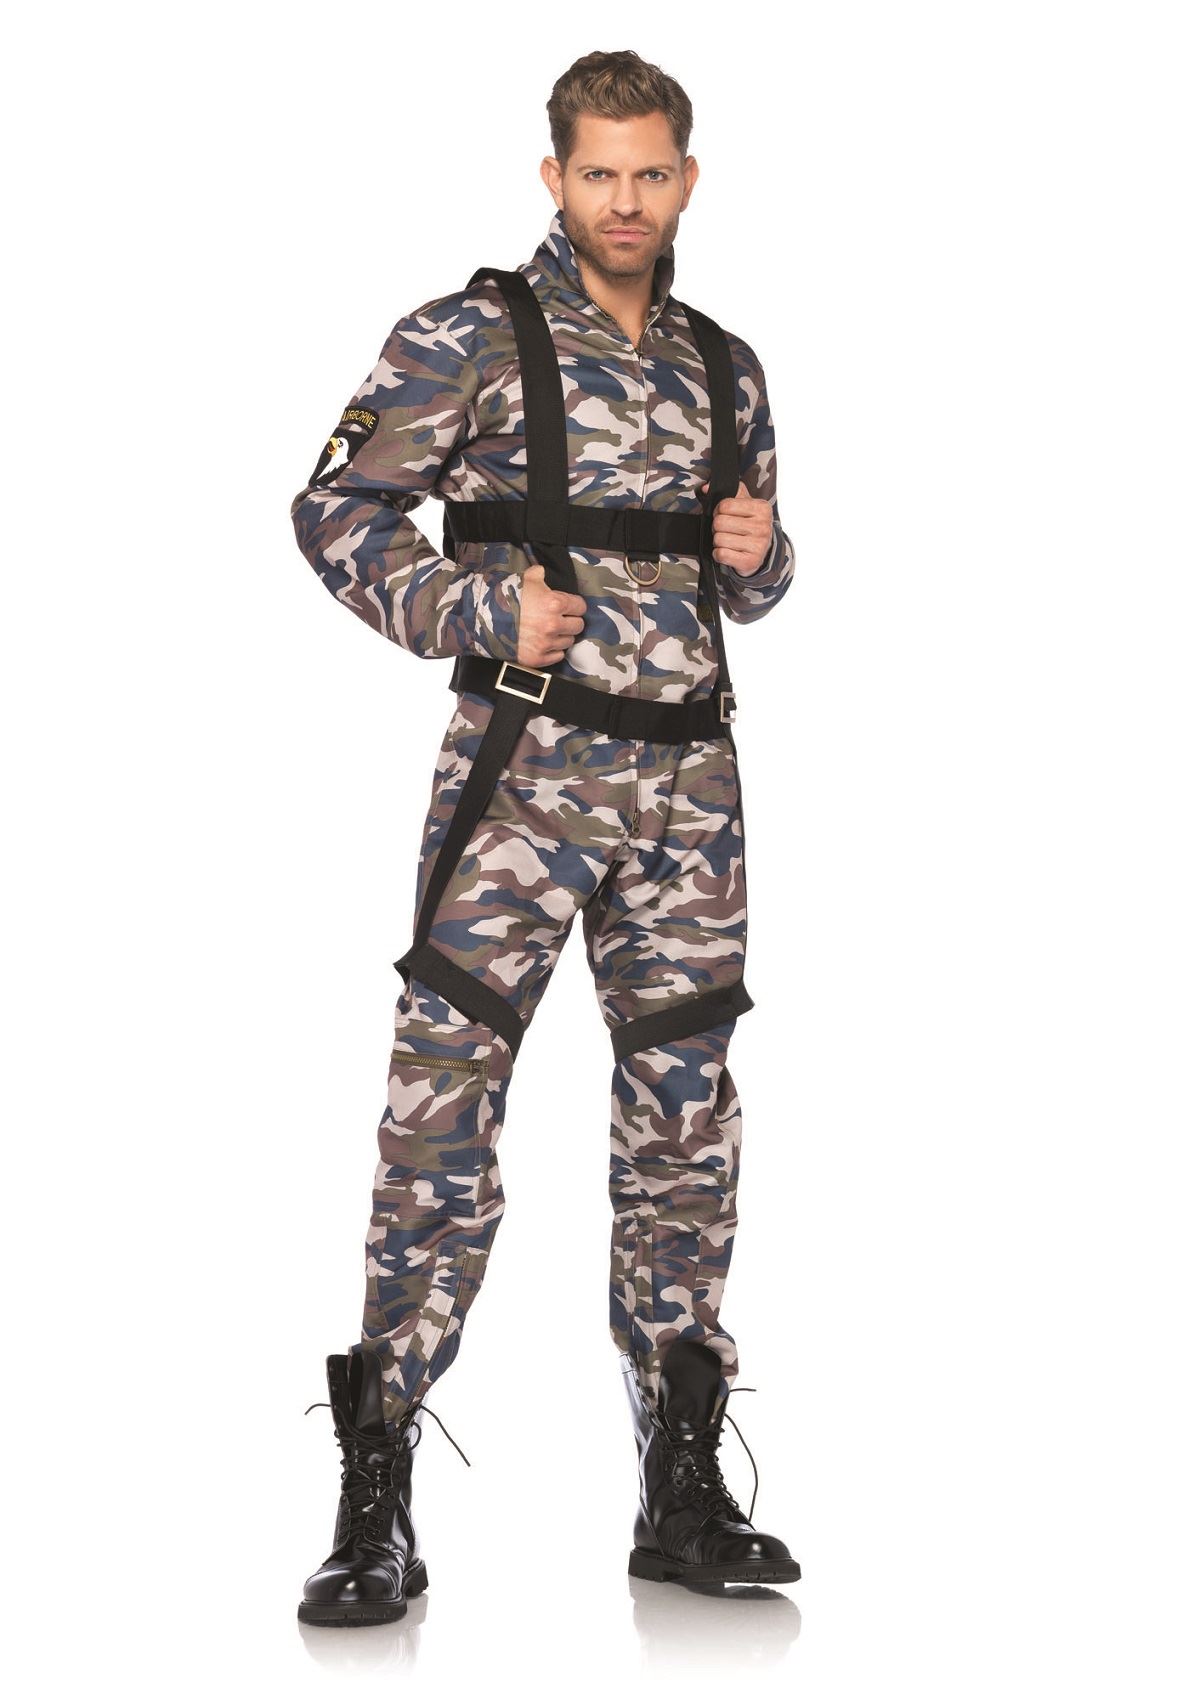 https://www.thecostumeland.com/images/zoom/la85279-paratrooper-men-army-soldier-camo-print-halloween-costumes.jpg